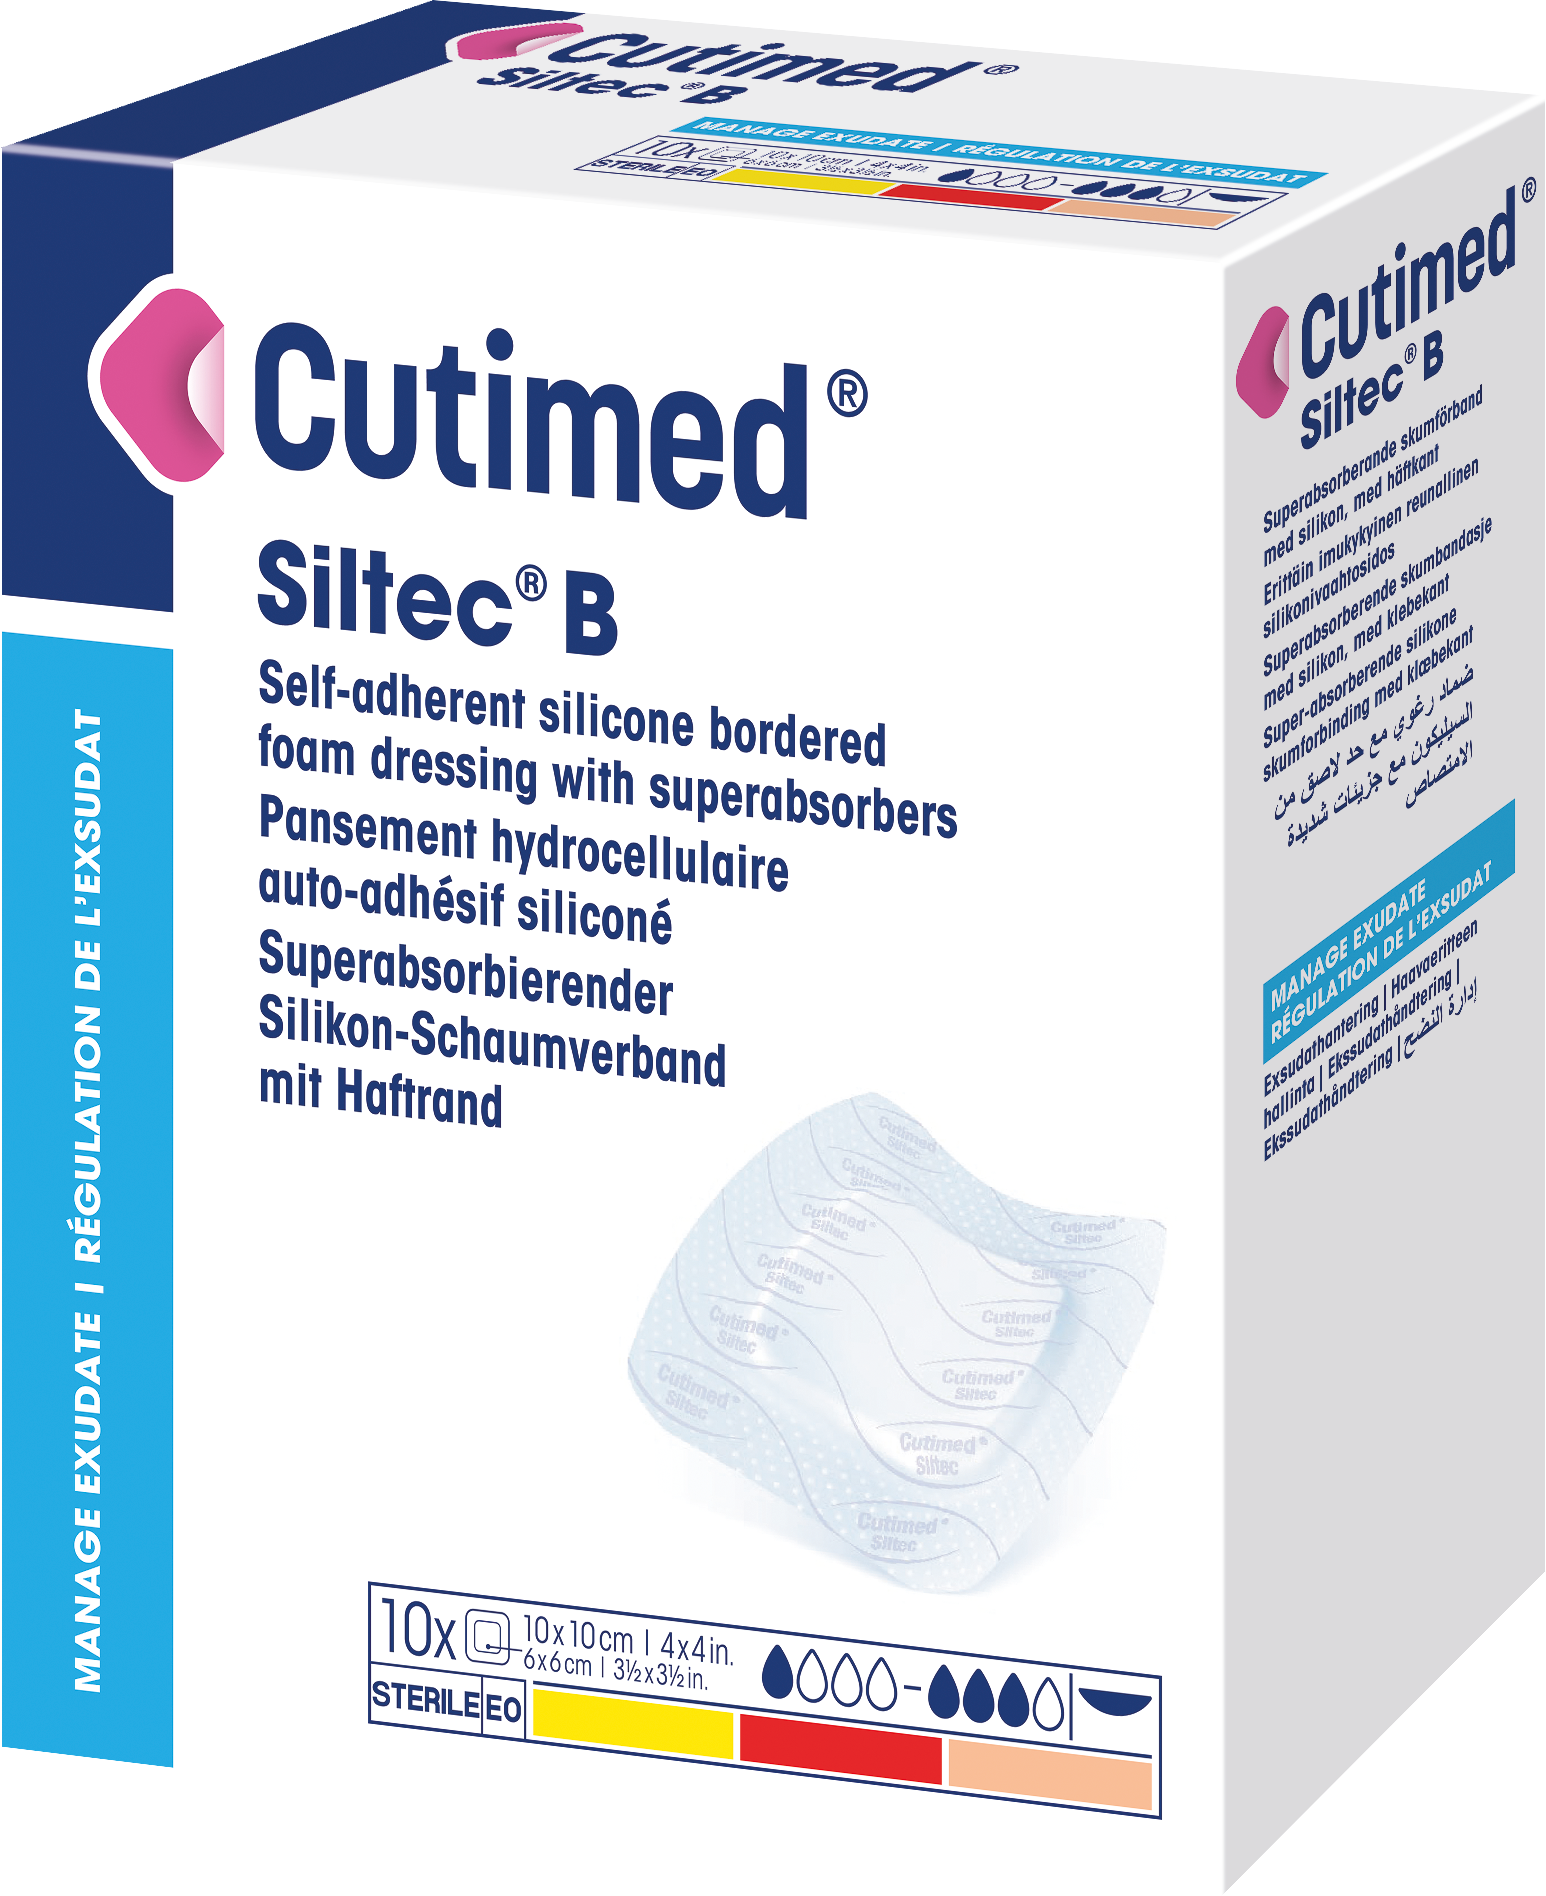 Immagine di una confezione di Cutimed® Siltec® B